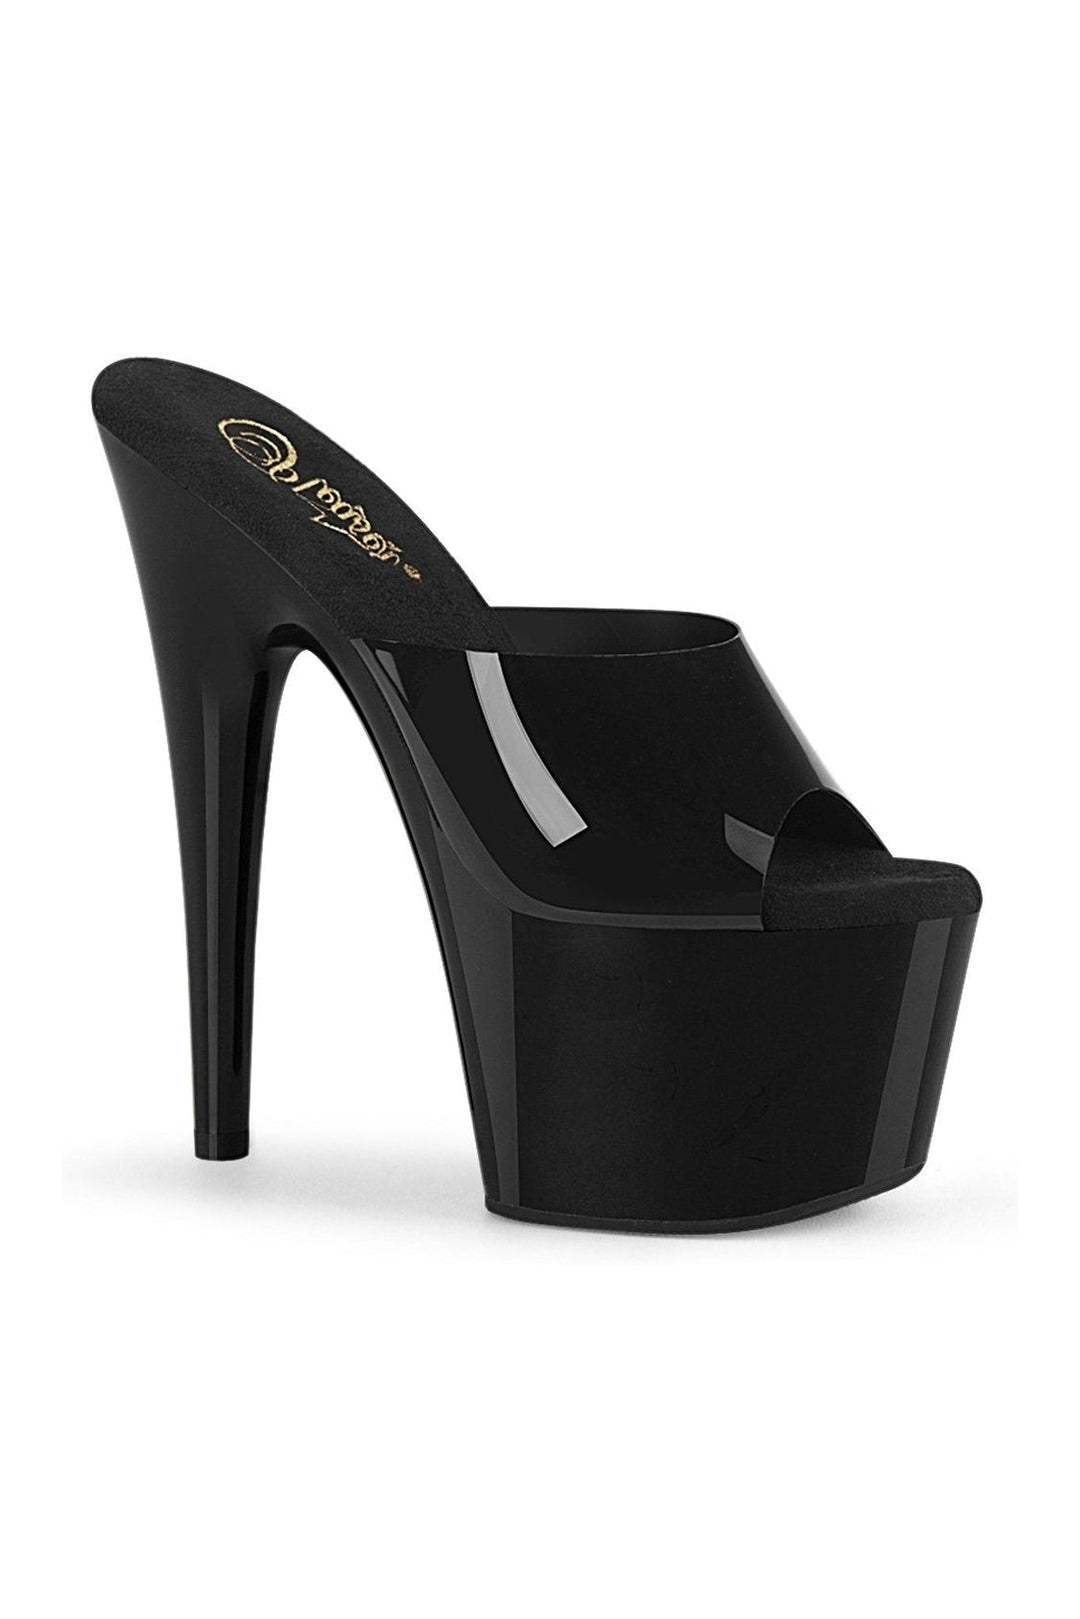 ADORE-701N Stripper Slide | Black Faux Leather-Slides-Pleaser-Black-8-Faux Leather-SEXYSHOES.COM